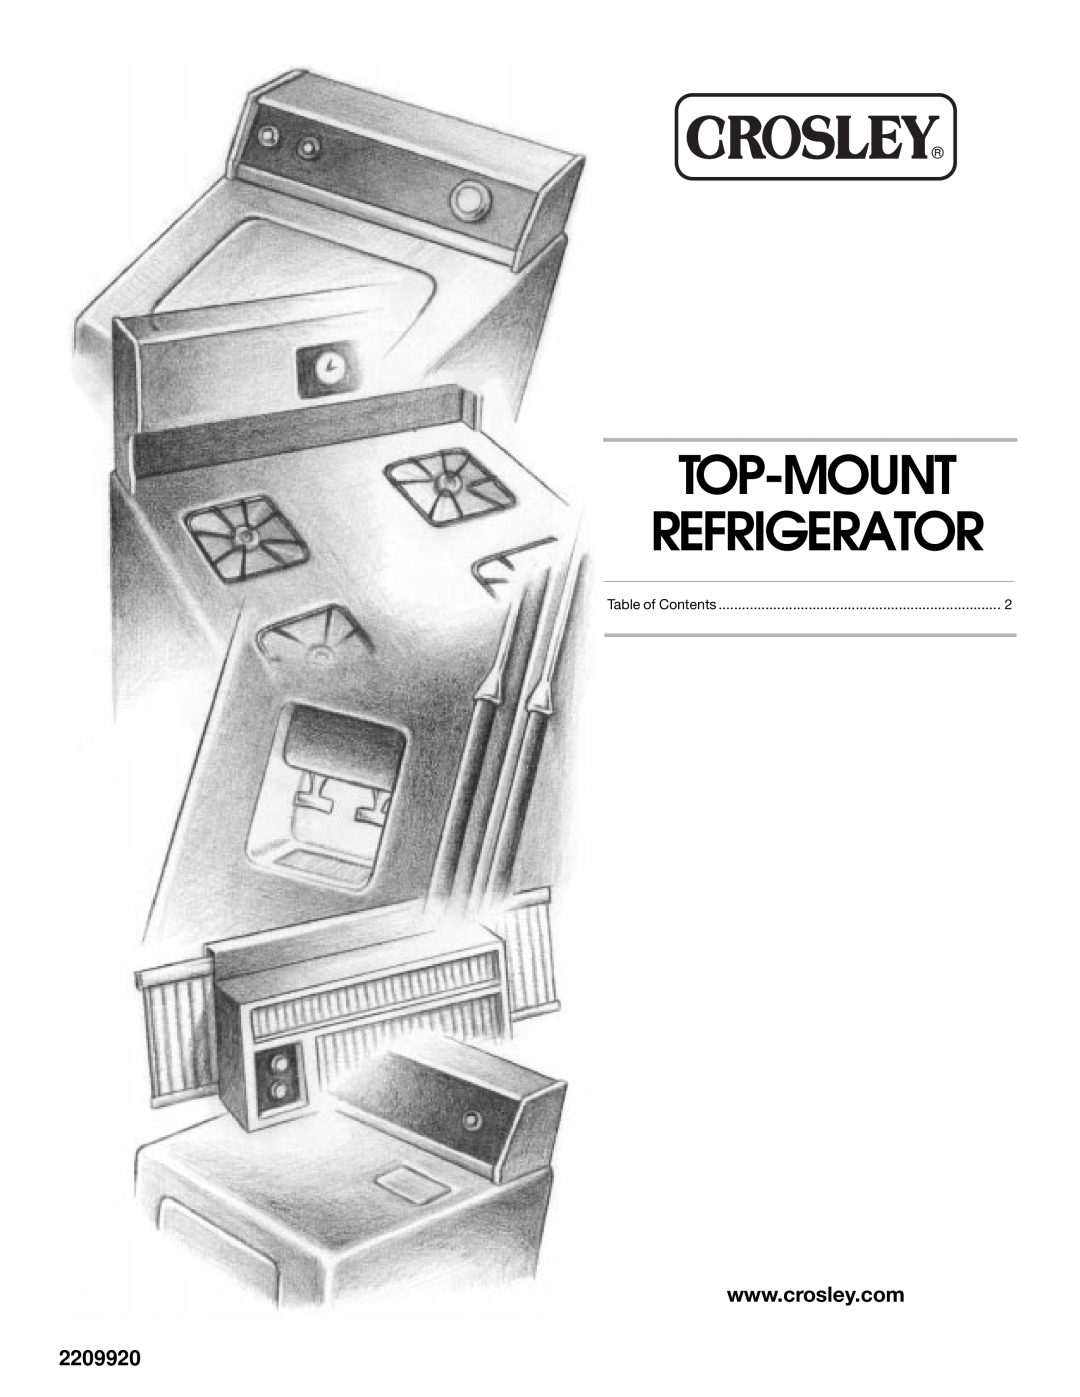 Crosley 2209920 manual Top-Mount Refrigerator, Table of Contents 